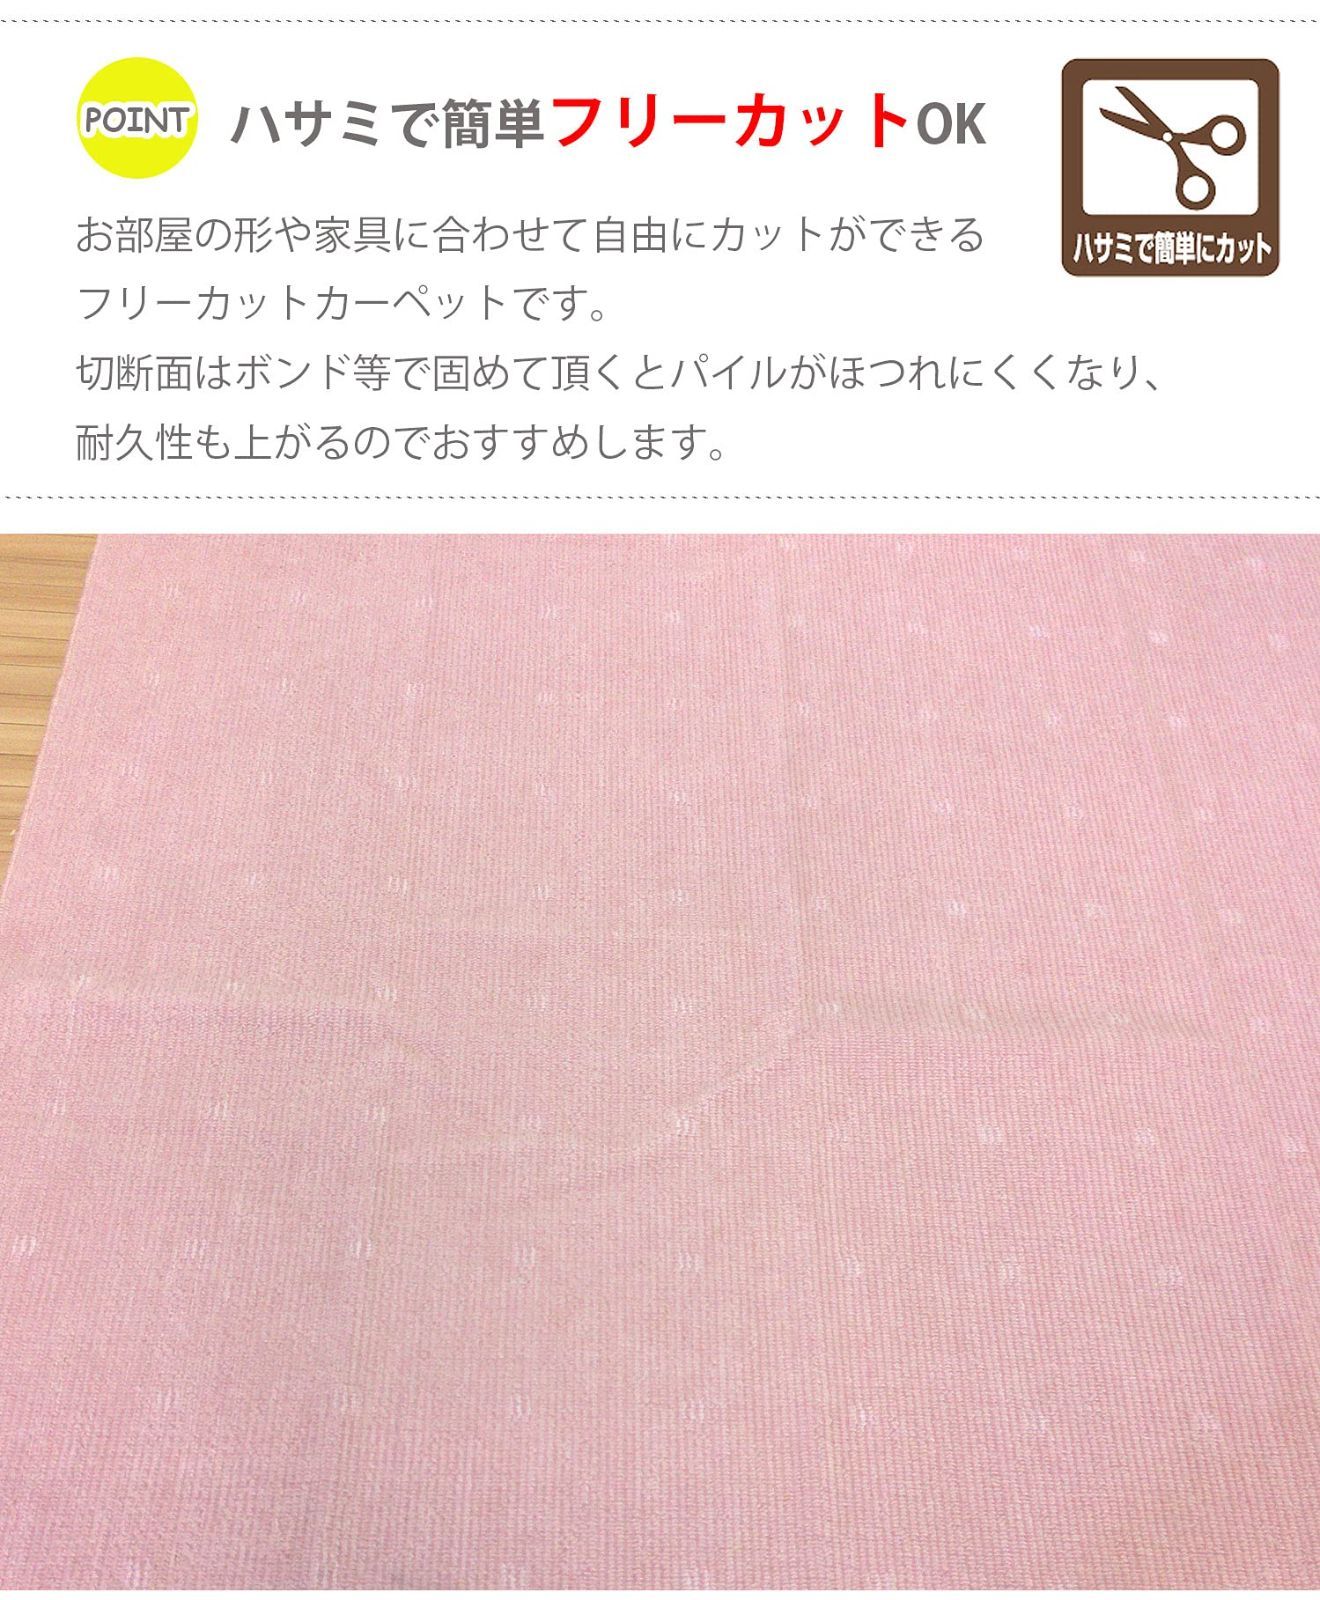 OPIST カーペット ラグマット 抗菌 日本製 江戸間 8畳サイズ 352×3